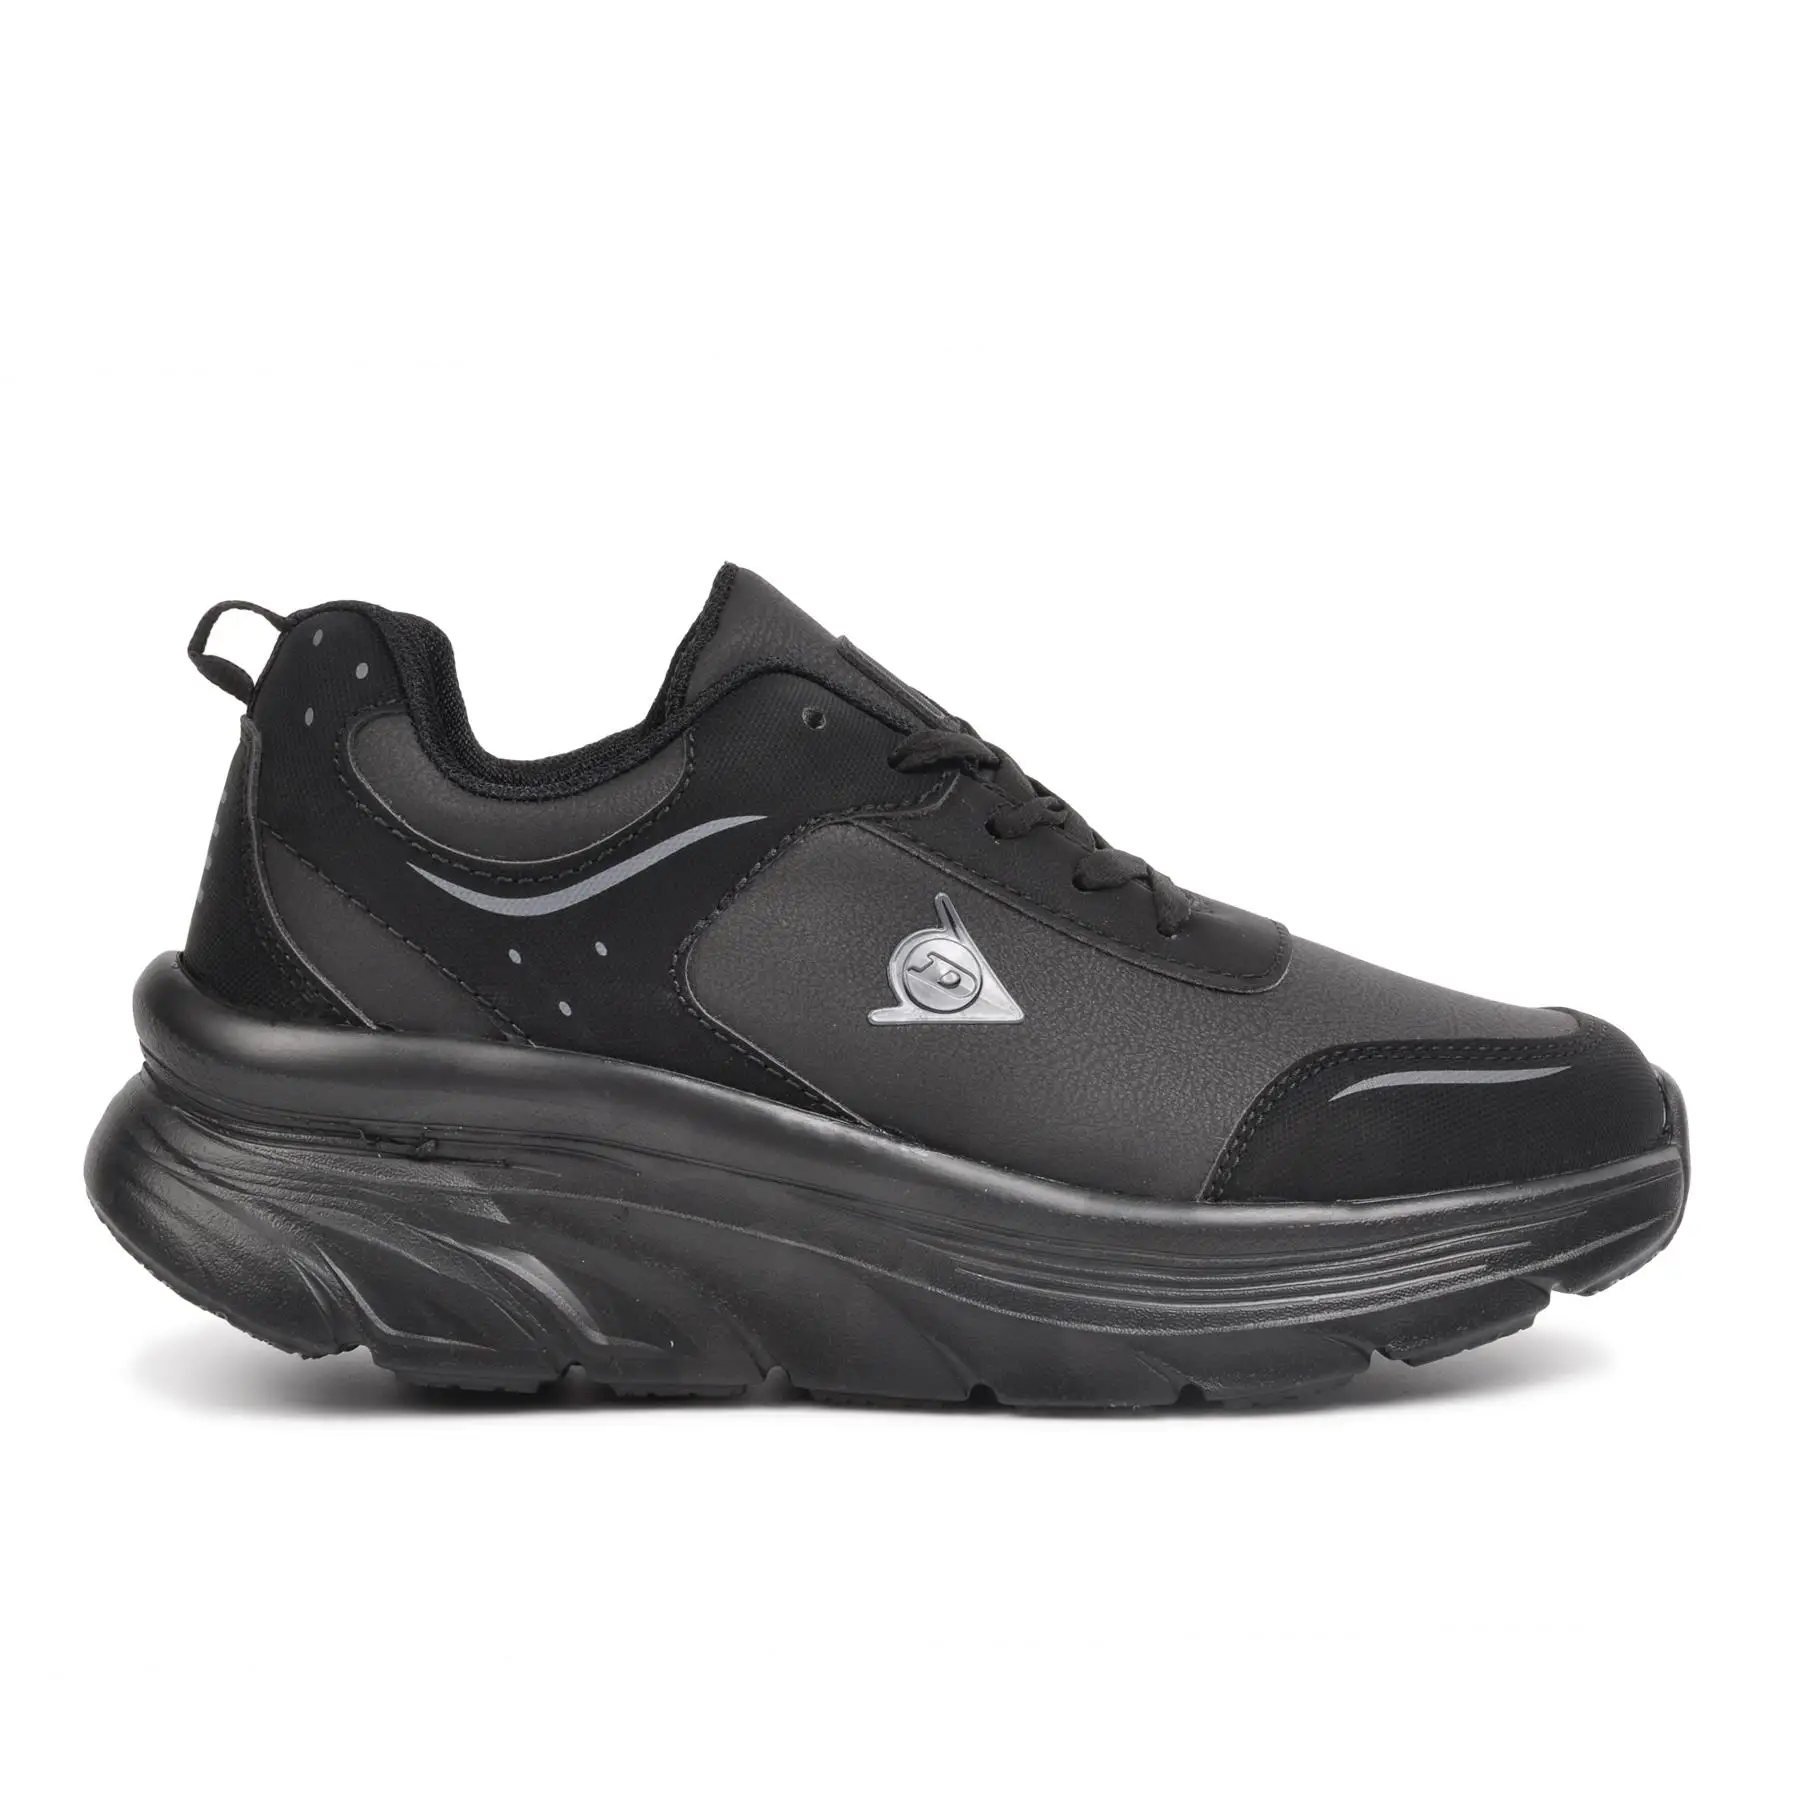 Dunlop-zapatillas De Suela Gruesa Para Mujer, Dnp-1502, Negras